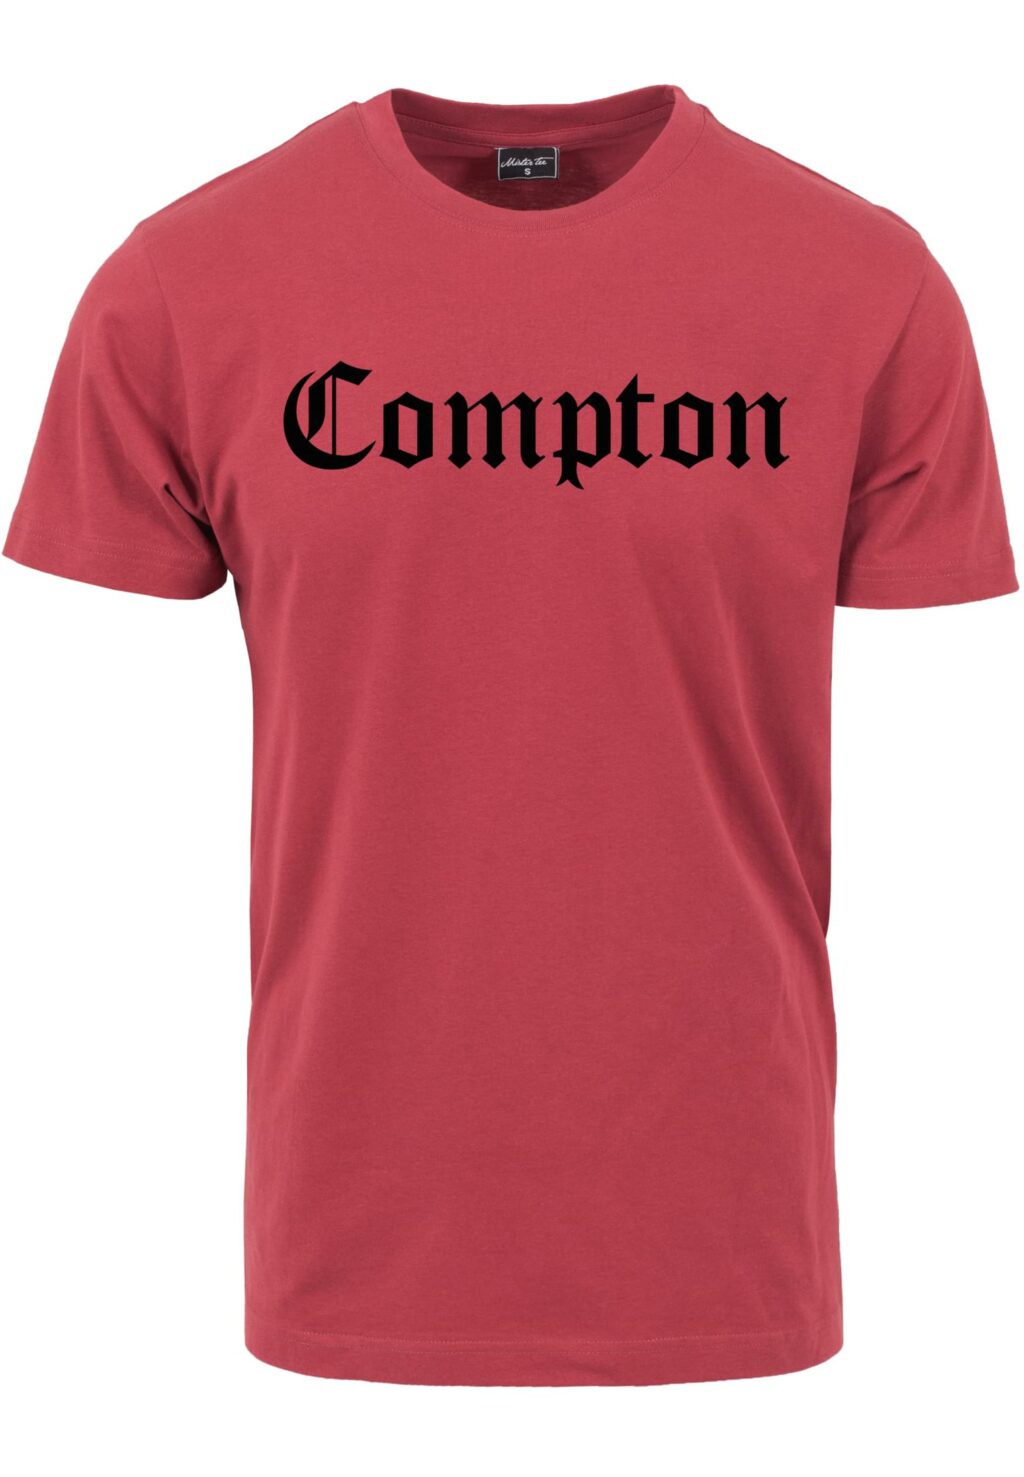 Compton Tee ruby MT268